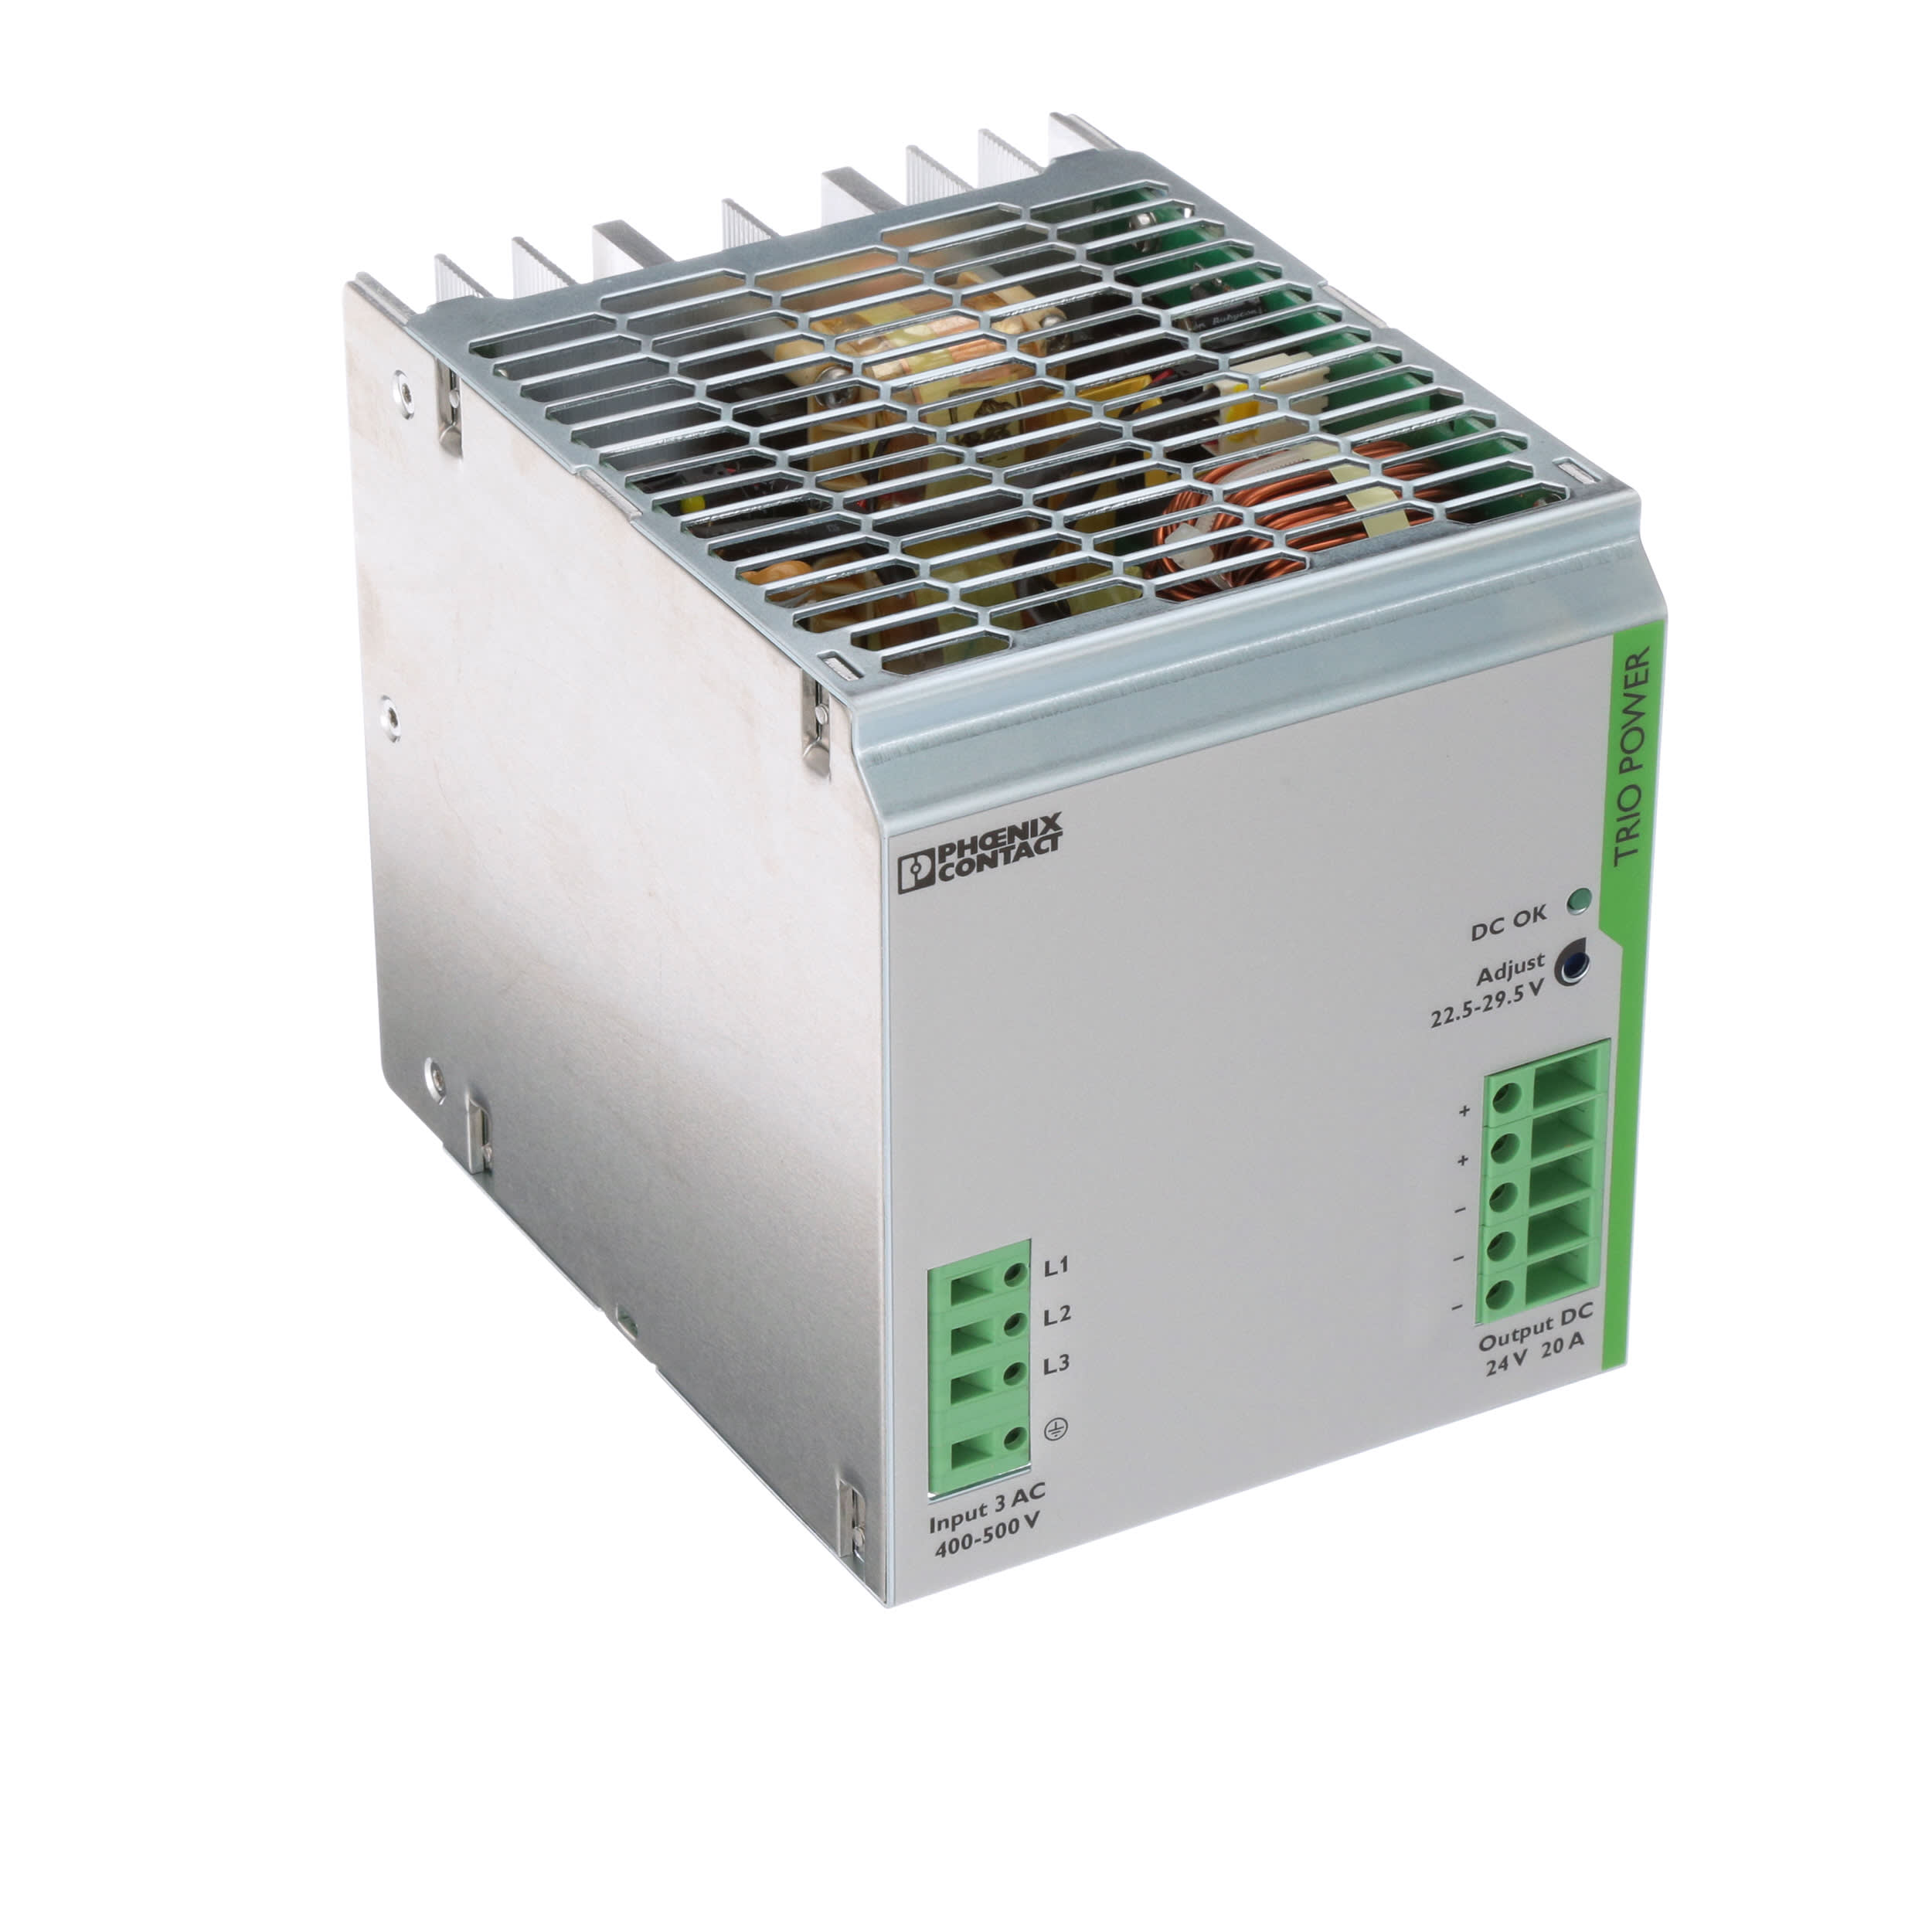 Comprar SAI Powertronix 650 VA On Line Interactivo autonomia 10' -  Telematic Online